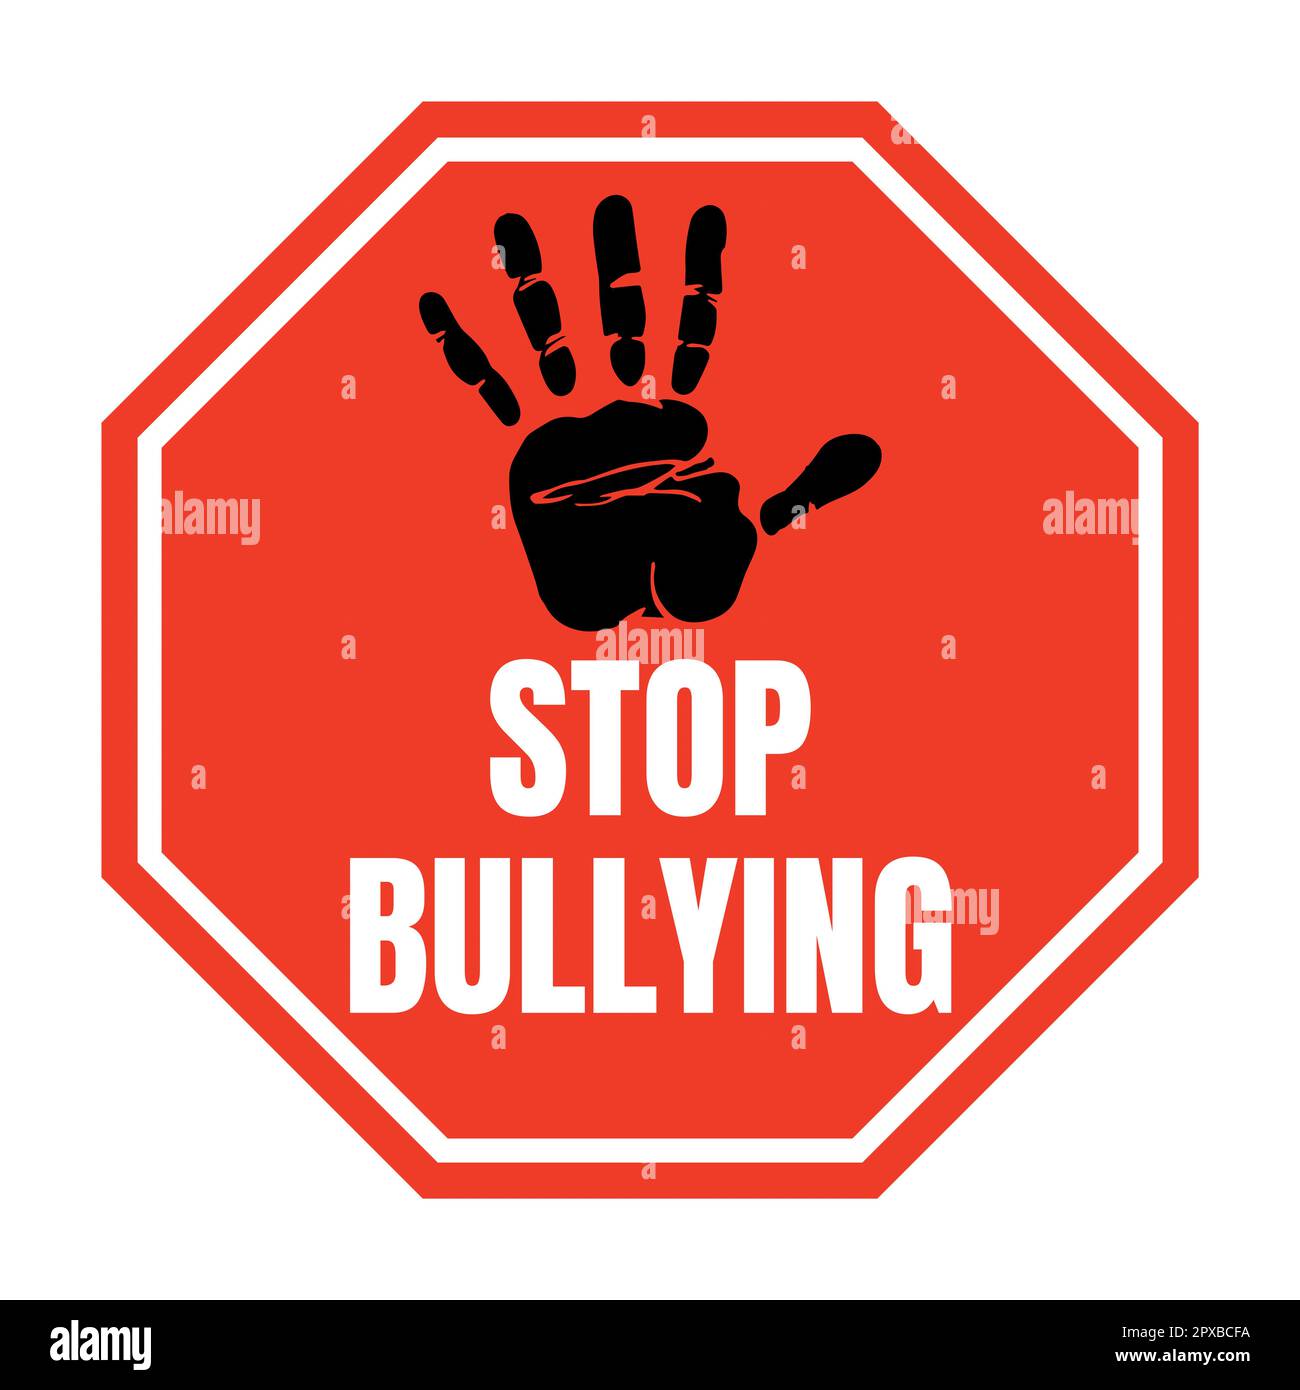 Stop bullying symbol icon Stock Photo - Alamy